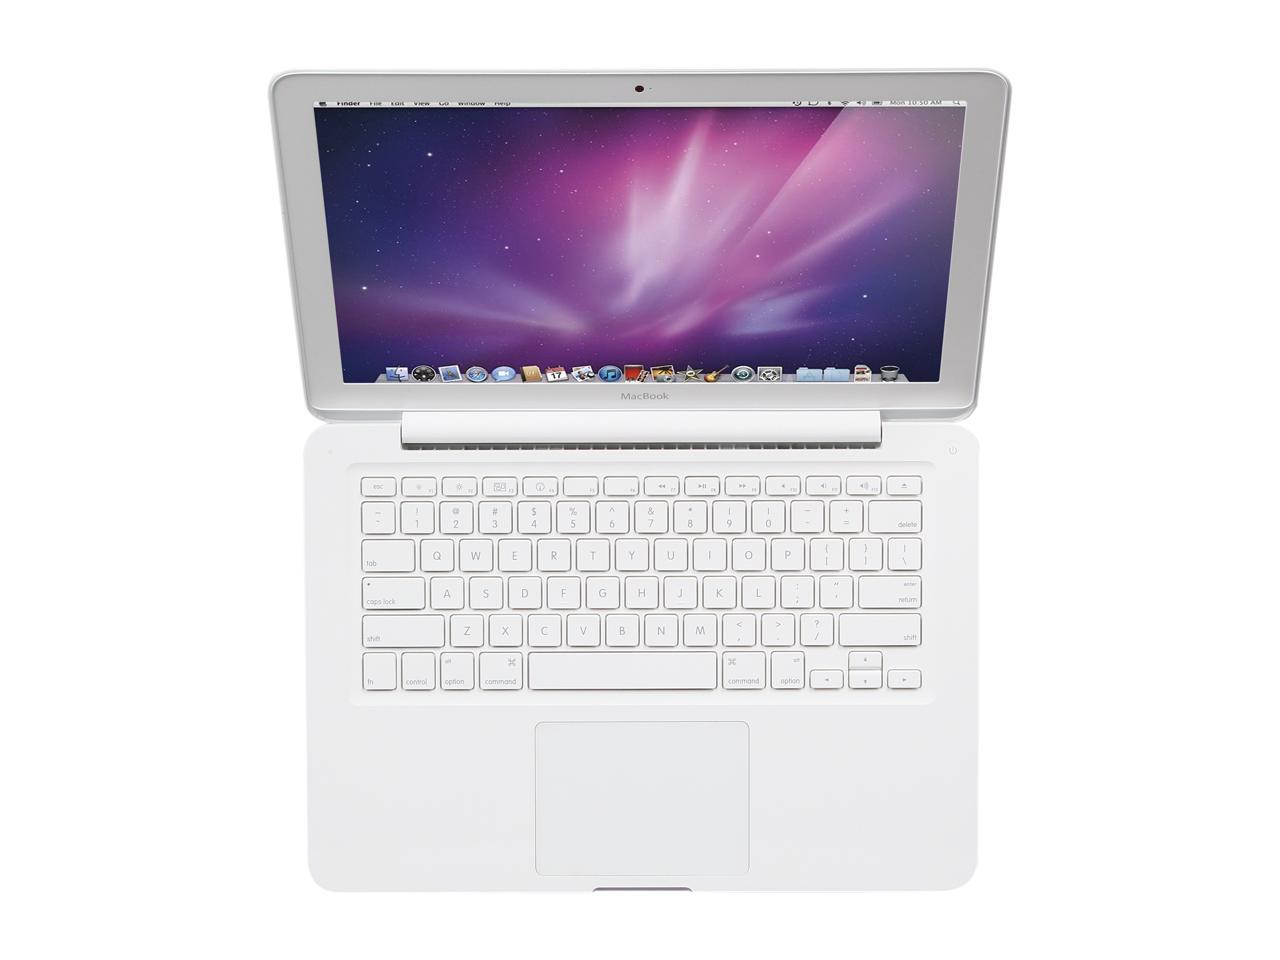 apple-mid-2010-13.3-inch-macbook-a1342-white-c2d - 2.4ghz processor, 4gb ram, 320m - 256mb gpu-mc516ll/a-5